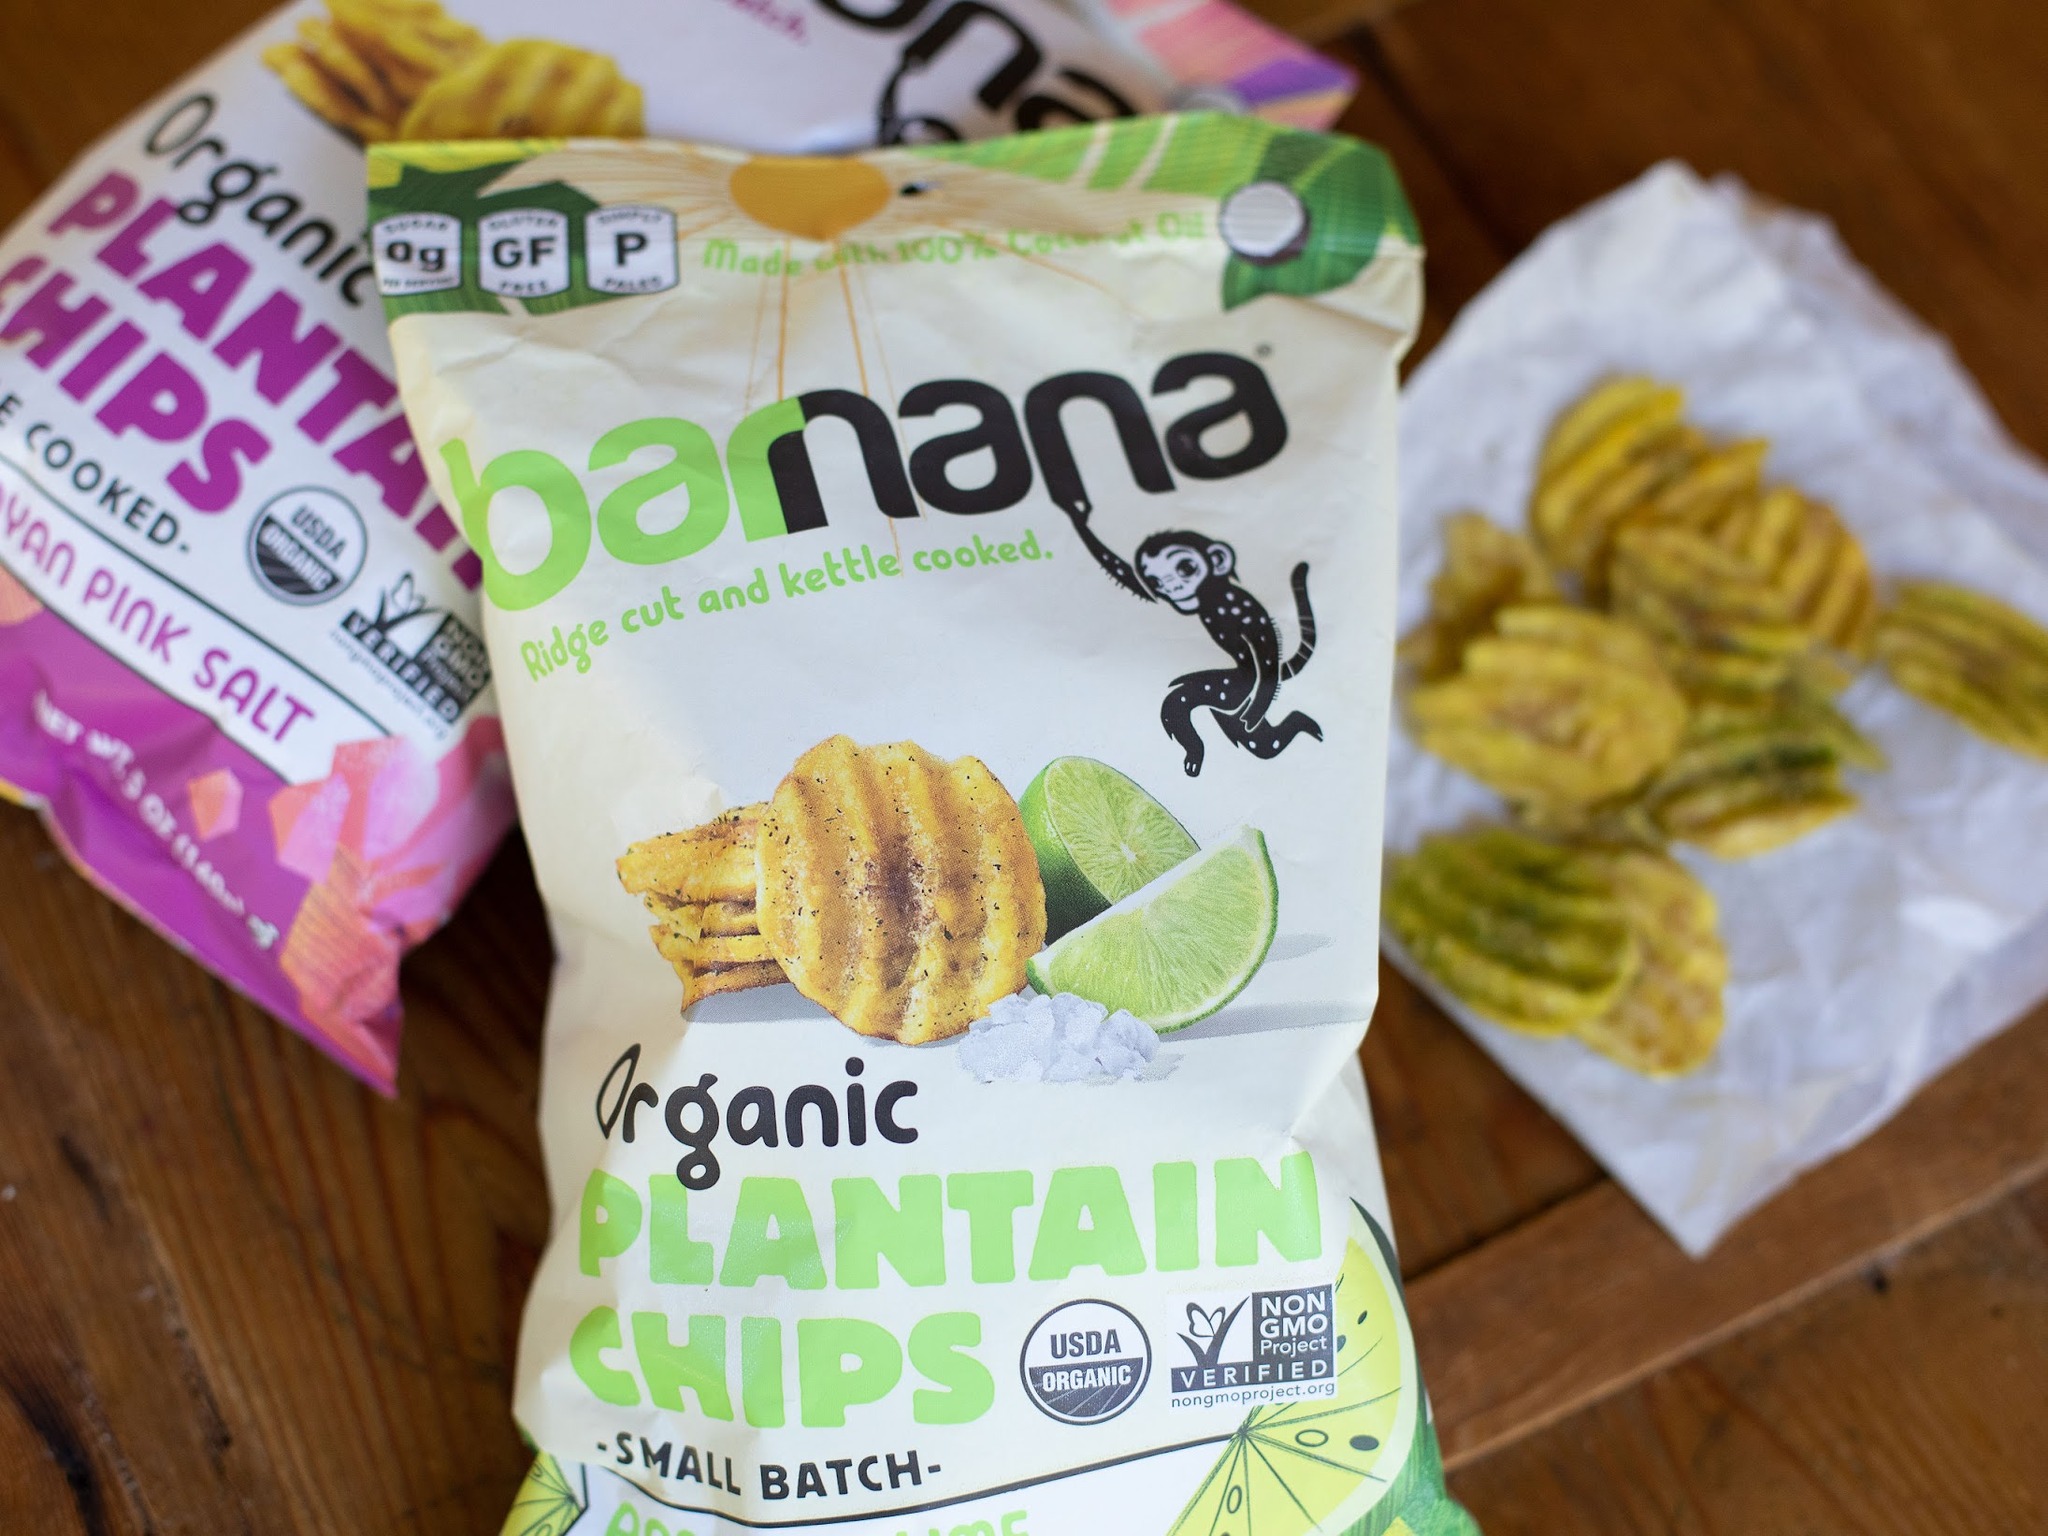 Barnana Plantain Chips Just $2 At Publix – Less Than Half The Regular Price!